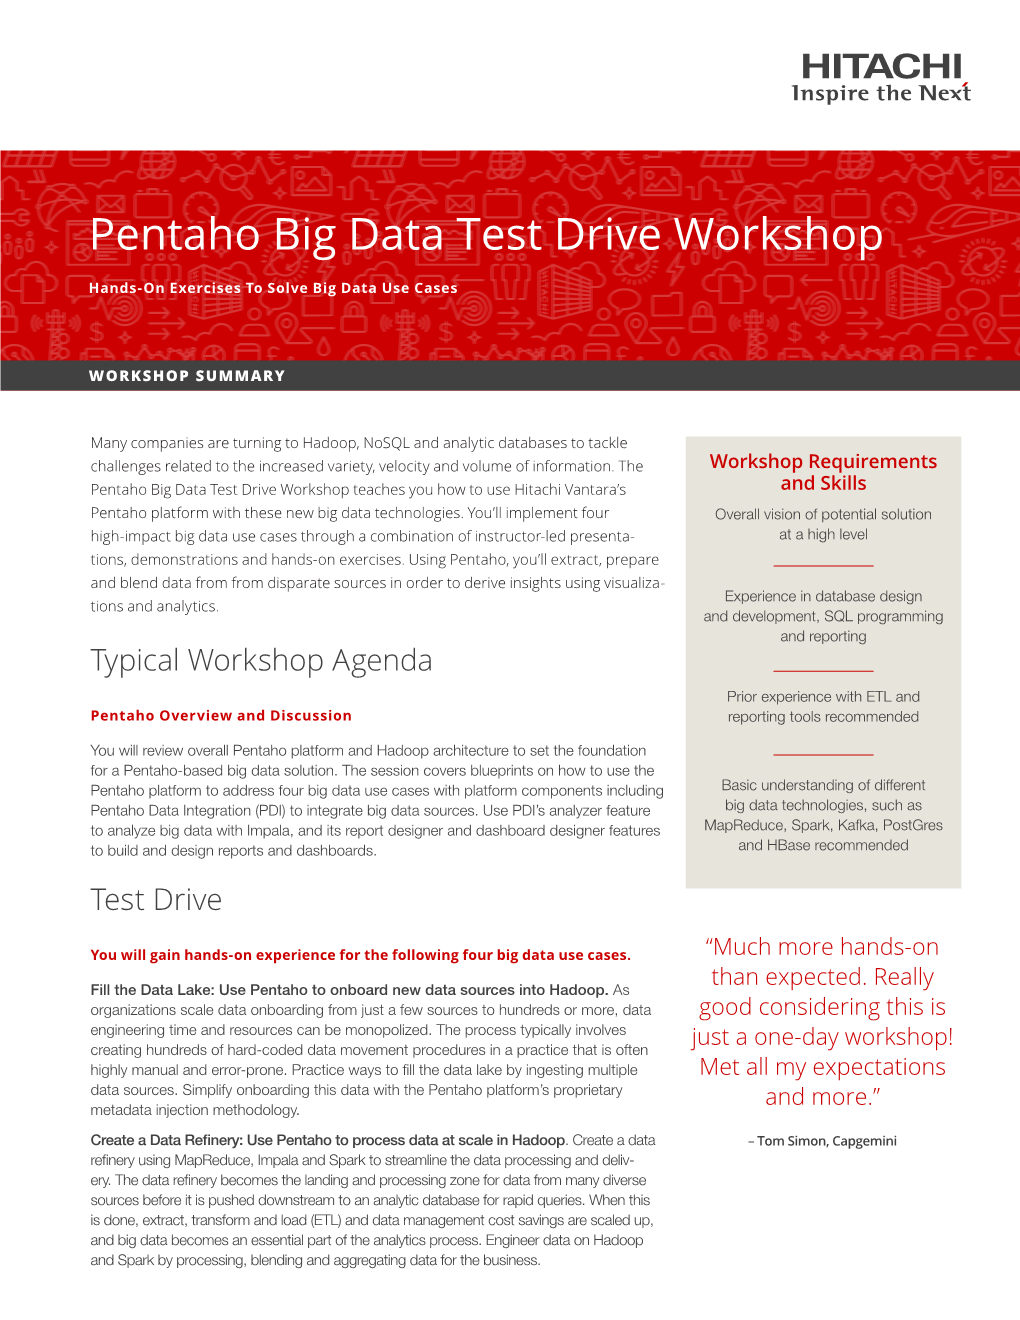 Pentaho Big Data Test Drive Workshop Summary